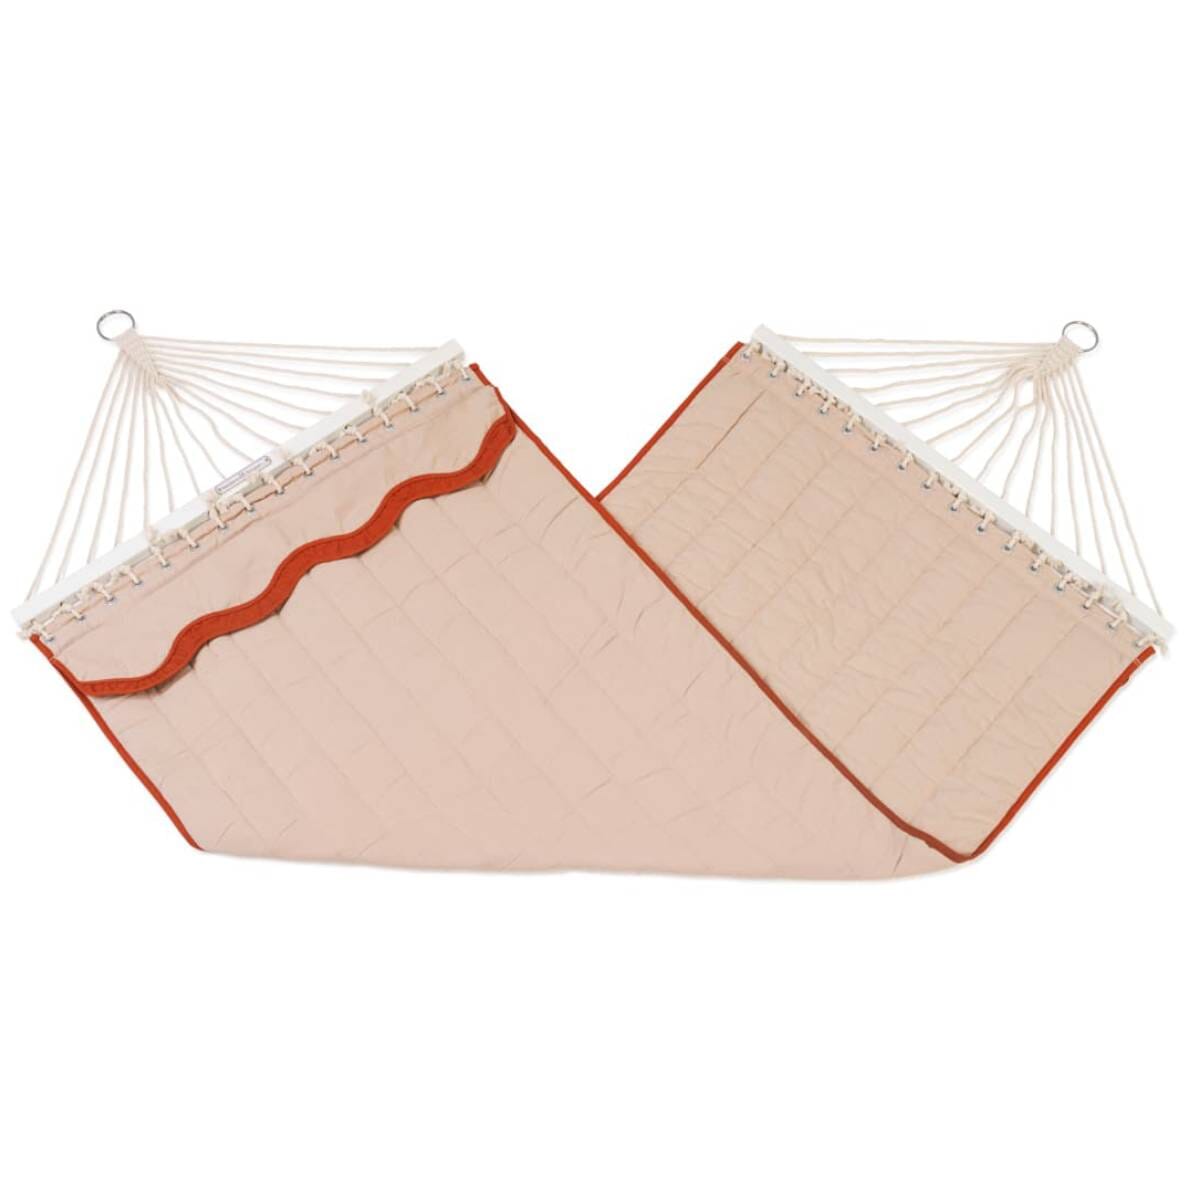 Studio image of riviera pink hammock